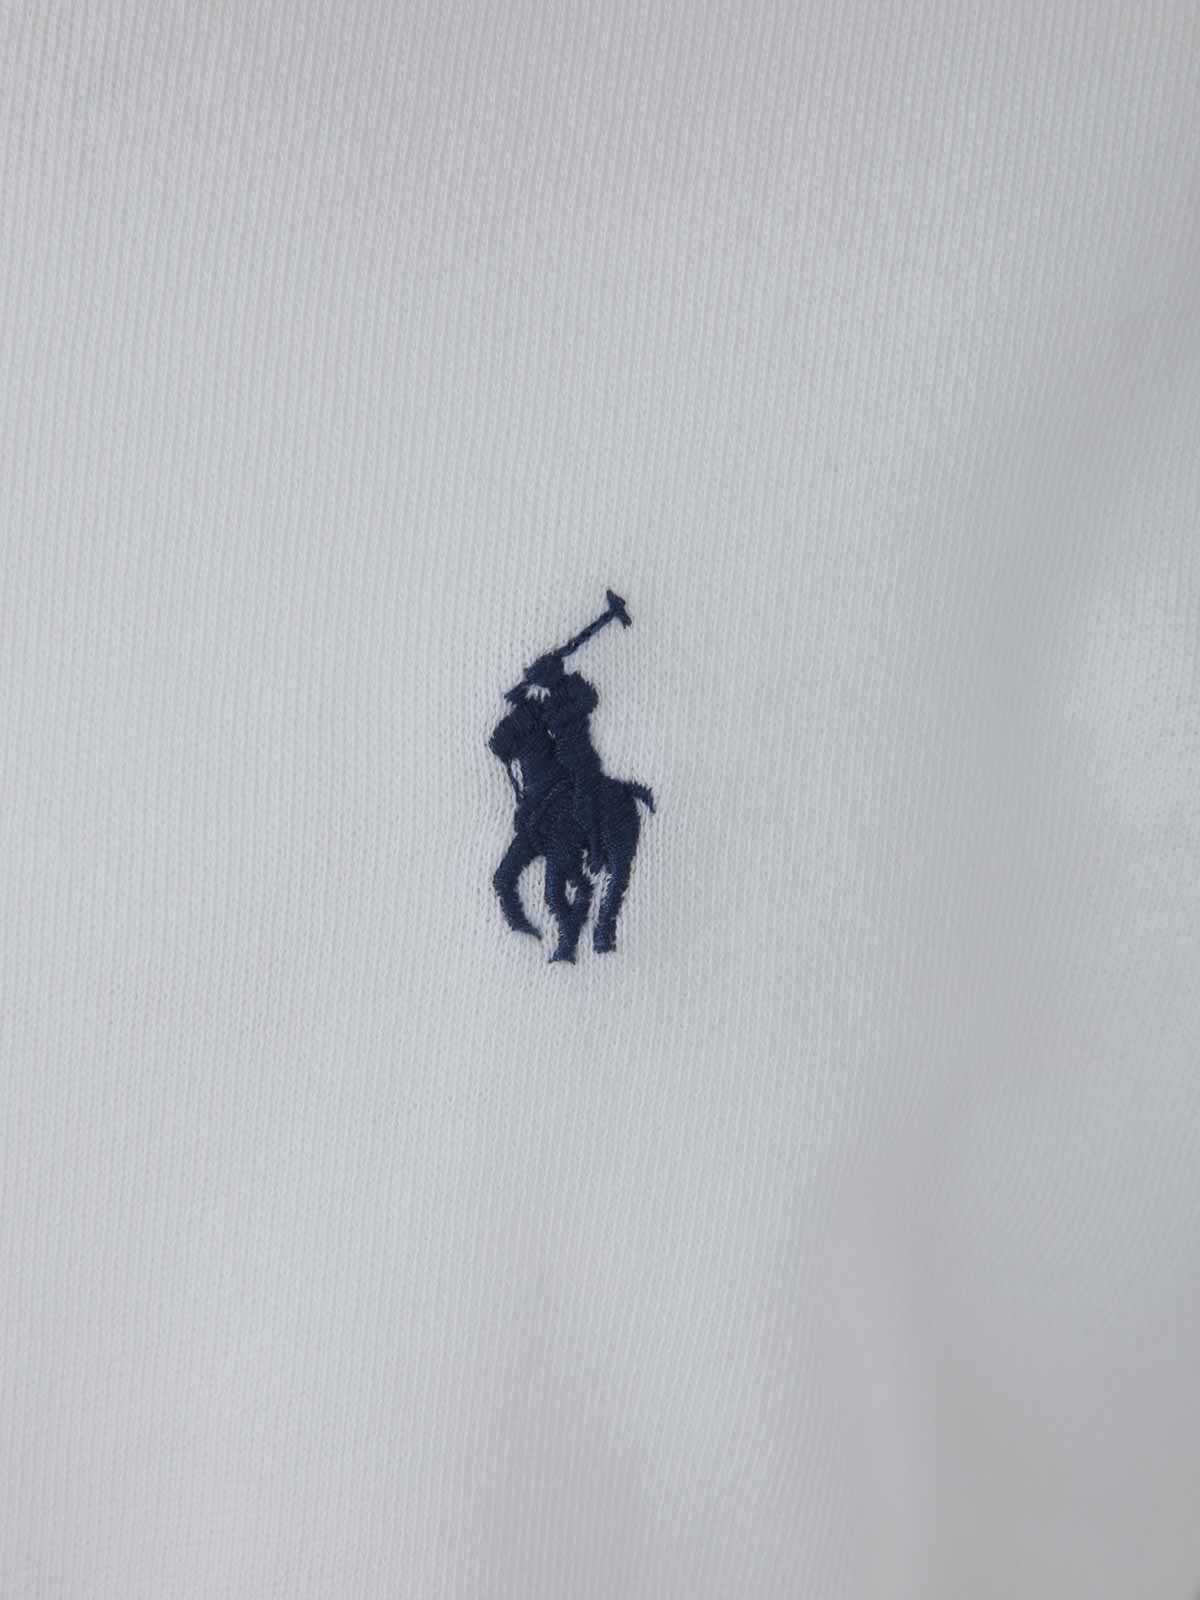 Shop Polo Ralph Lauren Lscnm13 Long Sleeve Sweatshirt In White